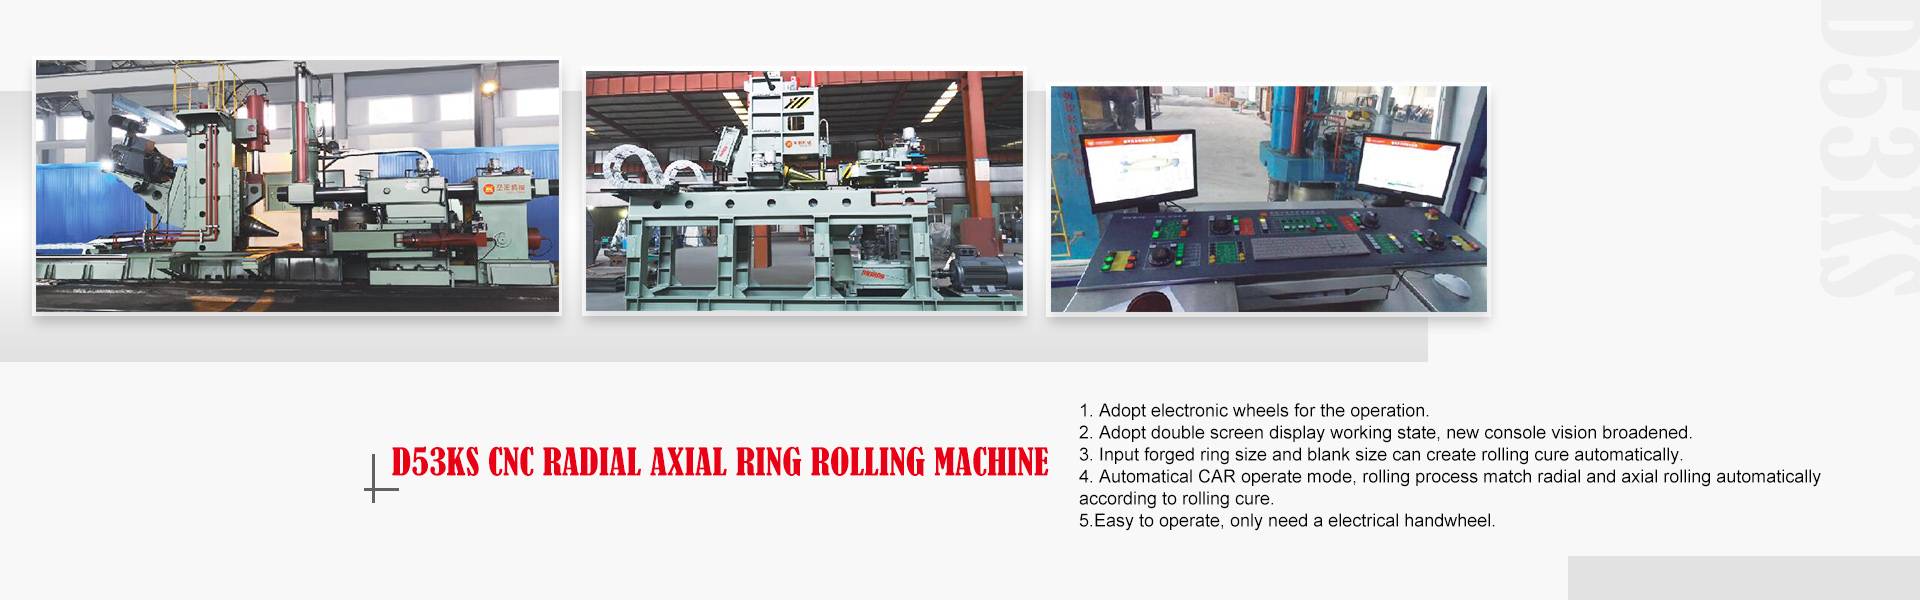 D53KS CNC RADIAL AXIAL RING ROLLING MACHINE